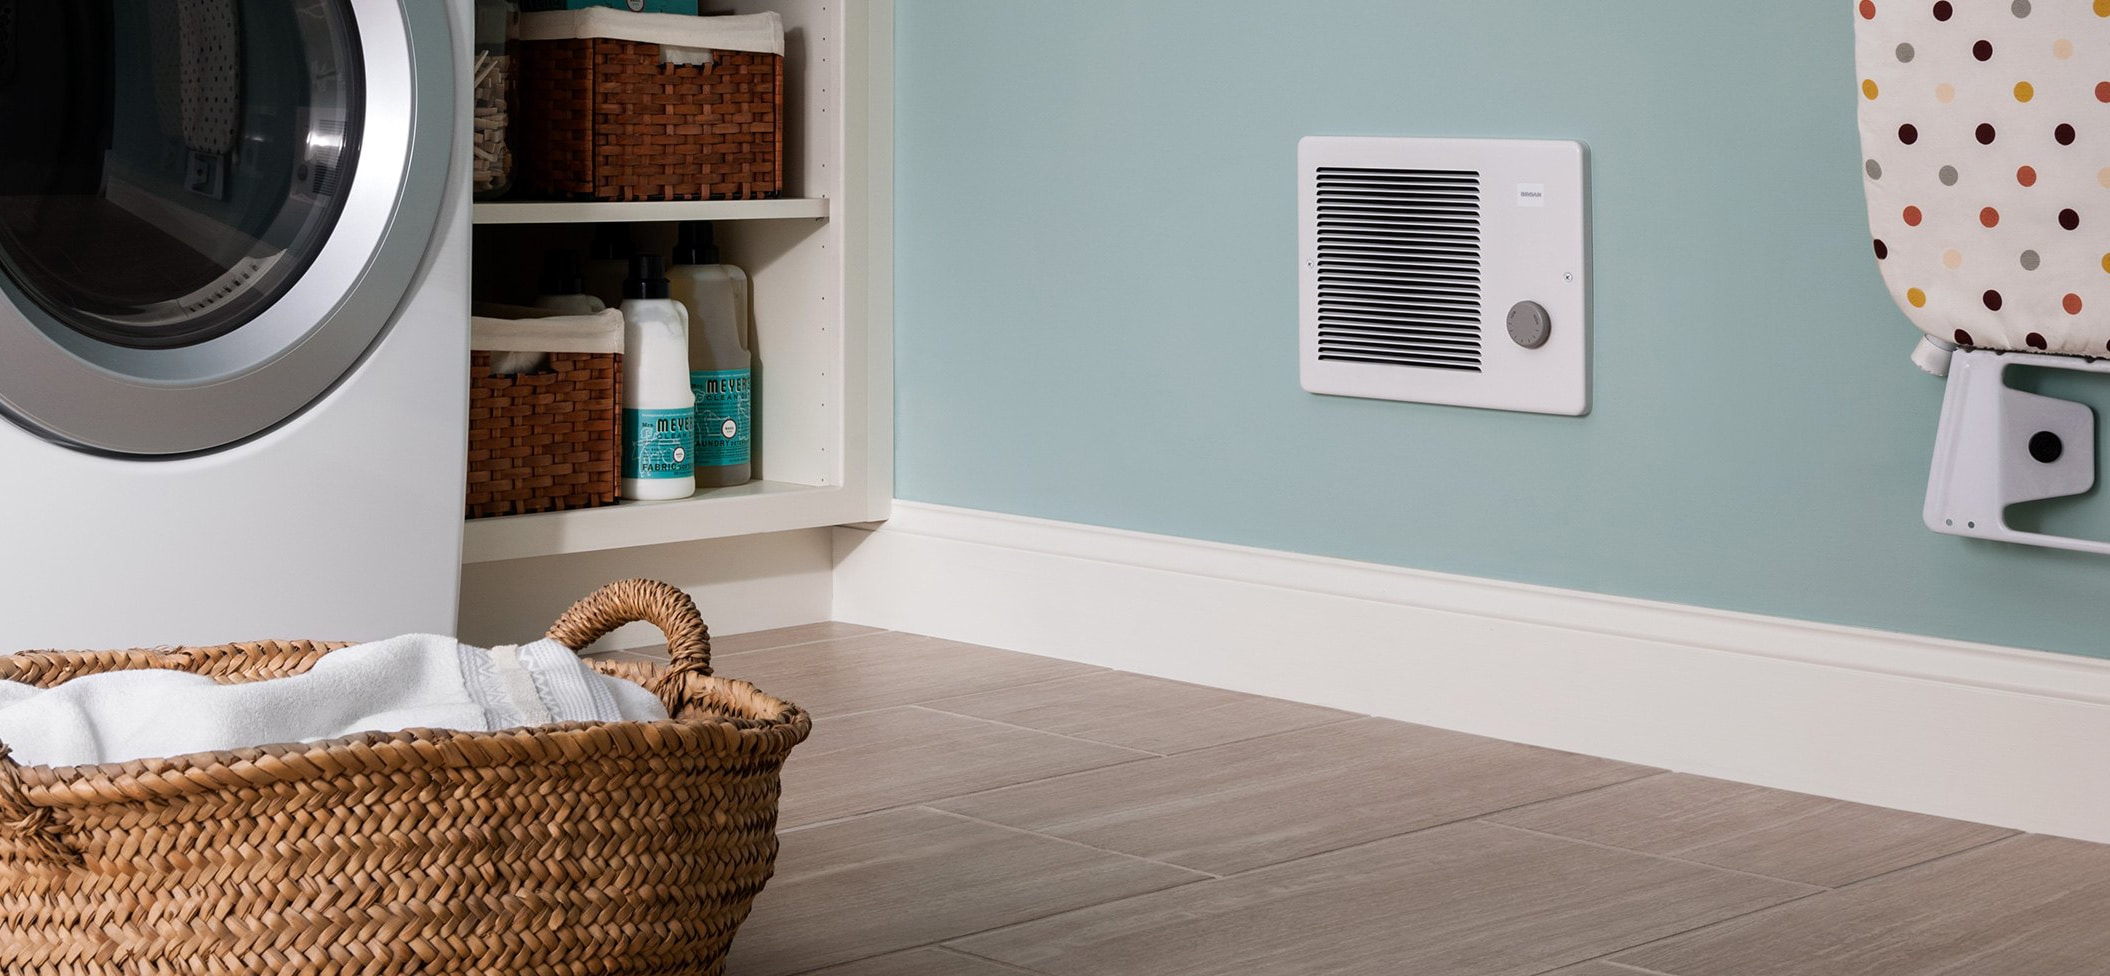 6 Best Bathroom Heaters Reviewed In Detail Apr 2020 throughout measurements 2110 X 976